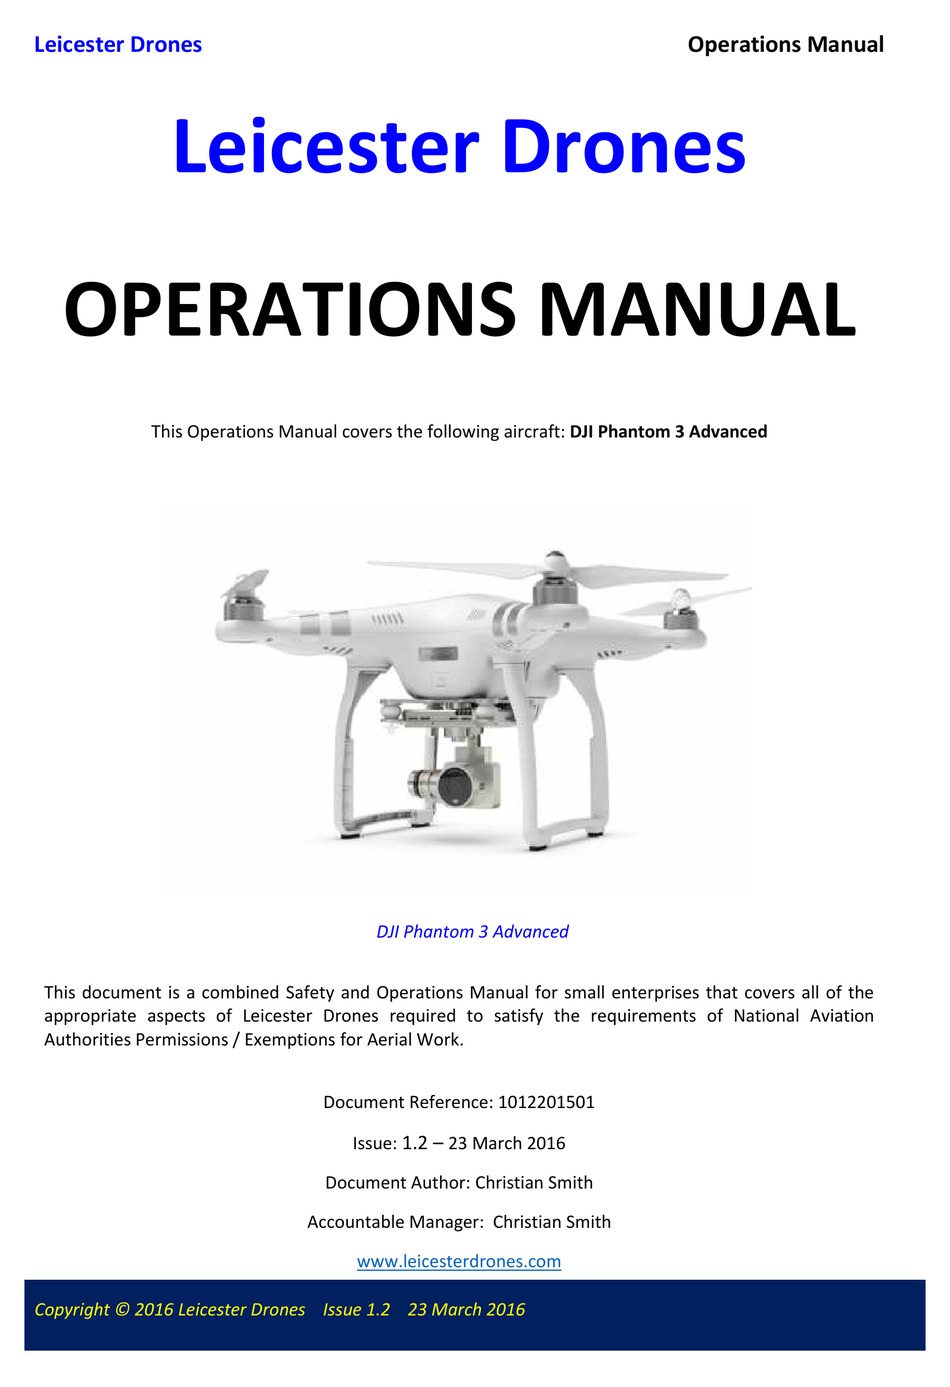 Trampolín girasol Desplazamiento DJI PHANTOM 3 ADVANCED OPERATION MANUAL Pdf Download | ManualsLib